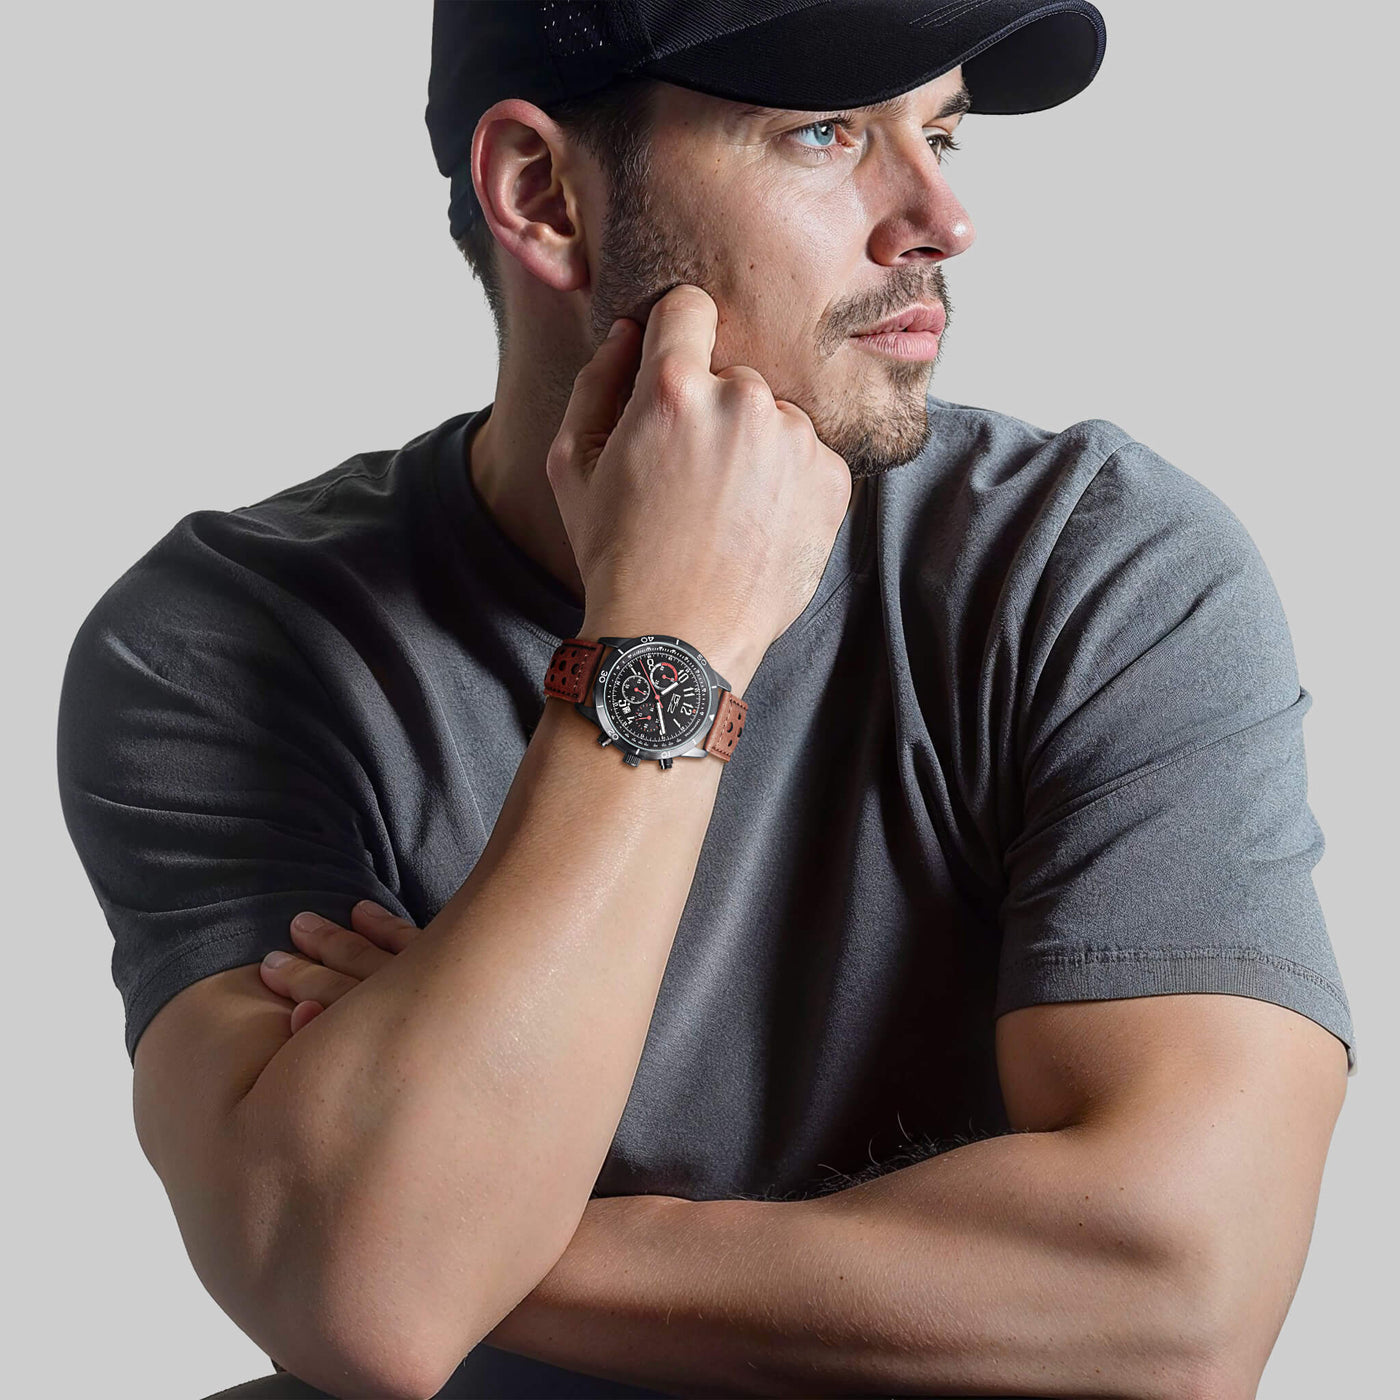 Man wearing black watch